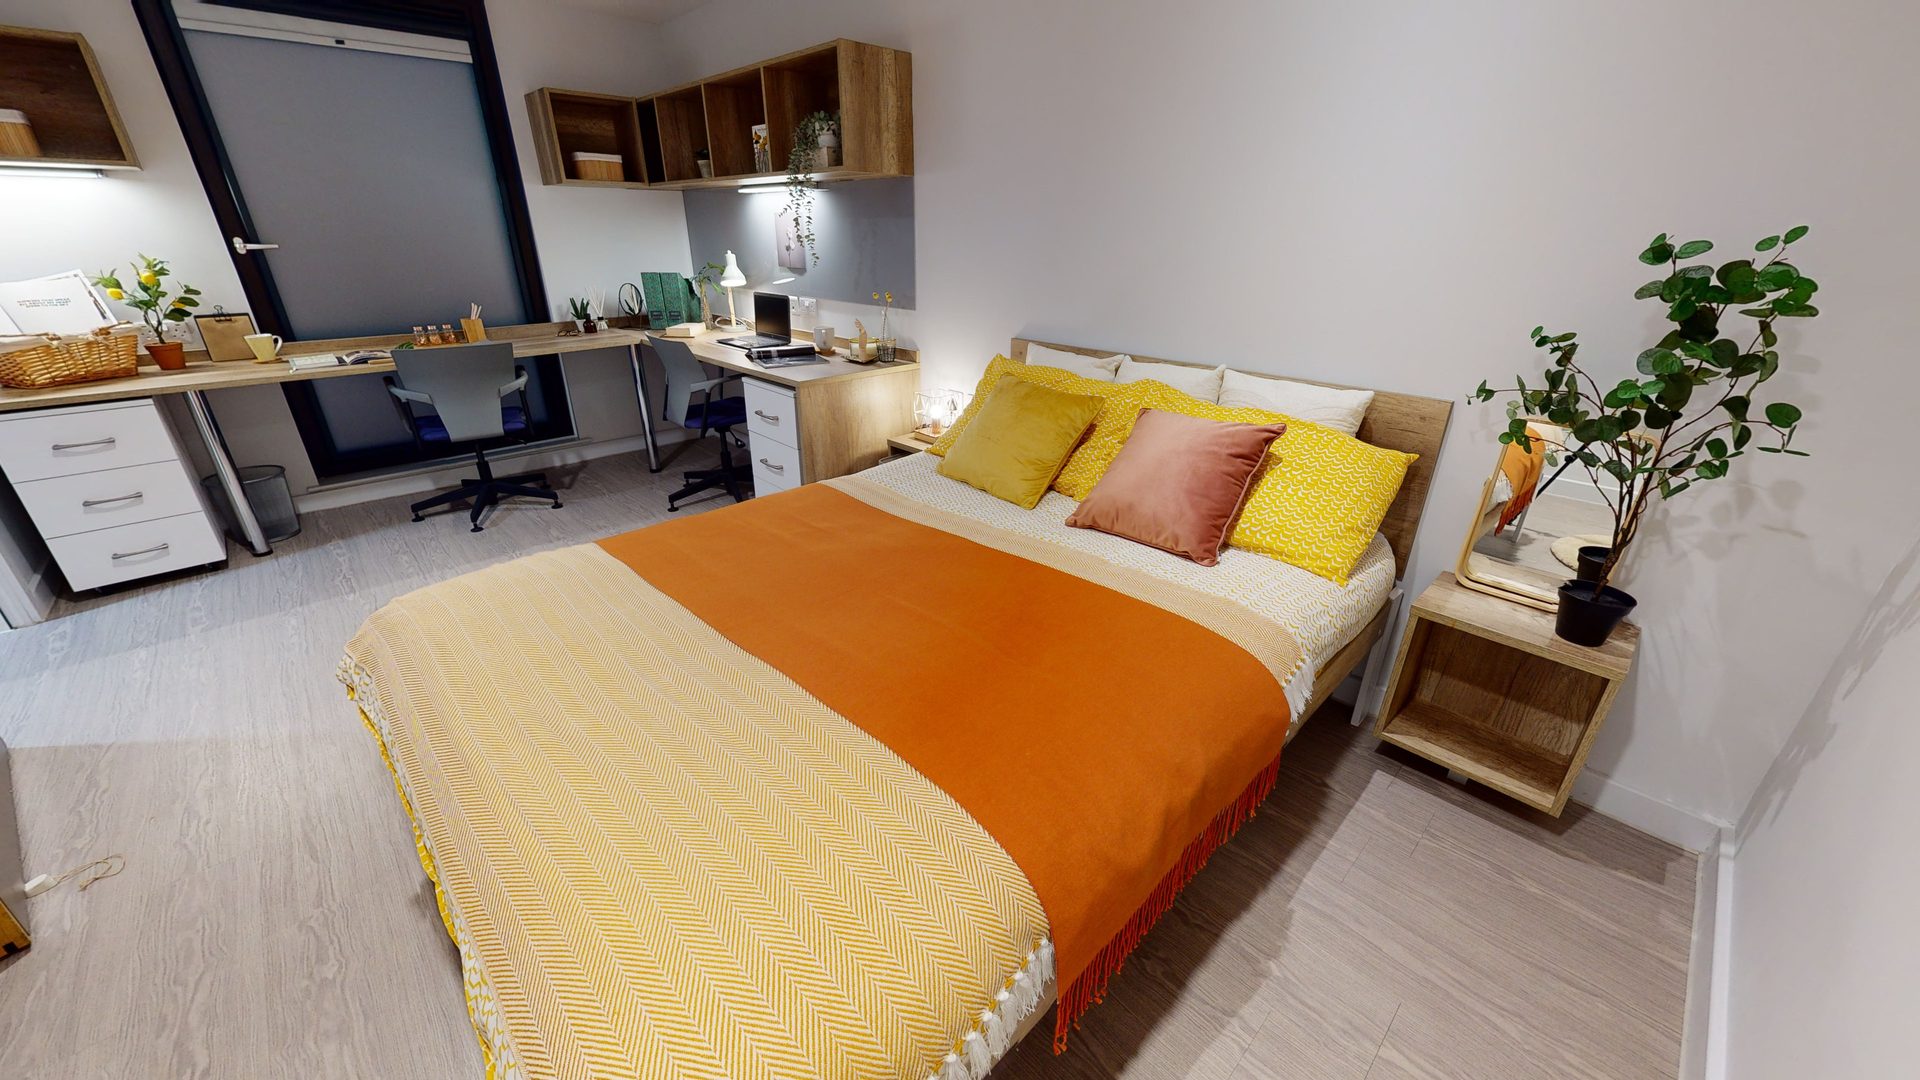 Bed frame, Furniture, Property, Comfort, Building, Table, Textile, Wood, Pillow, Orange